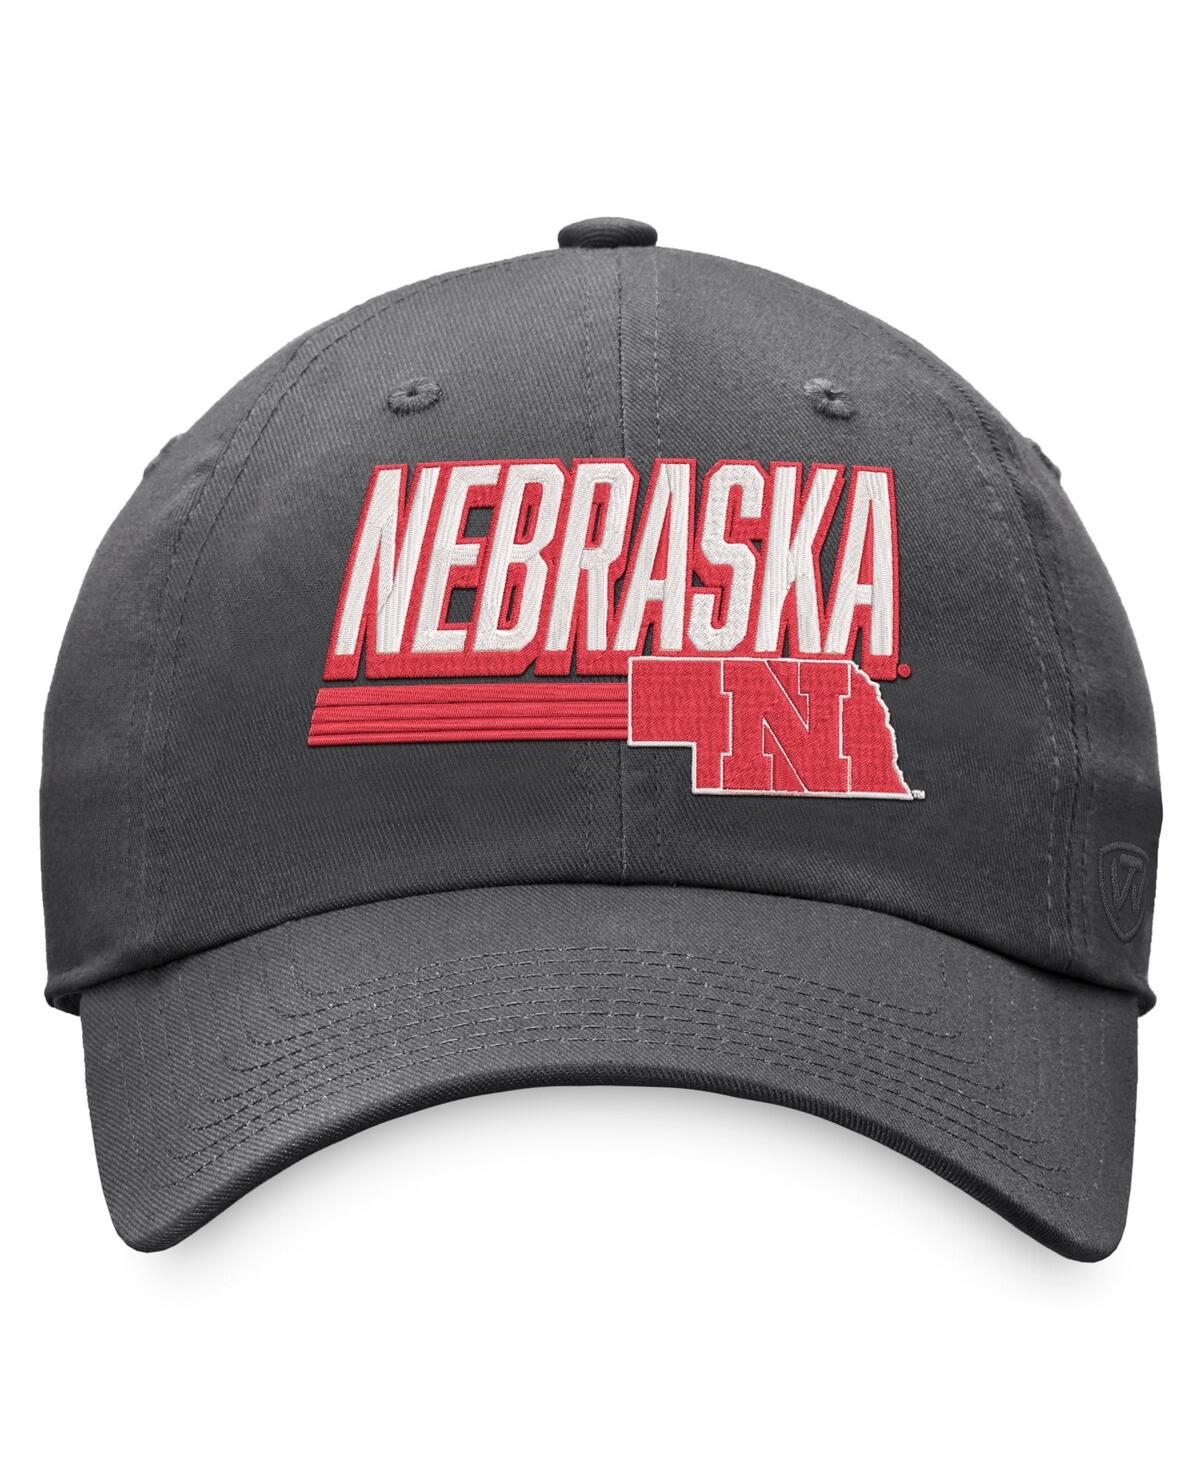 Shop Top Of The World Men's  Charcoal Nebraska Huskers Slice Adjustable Hat